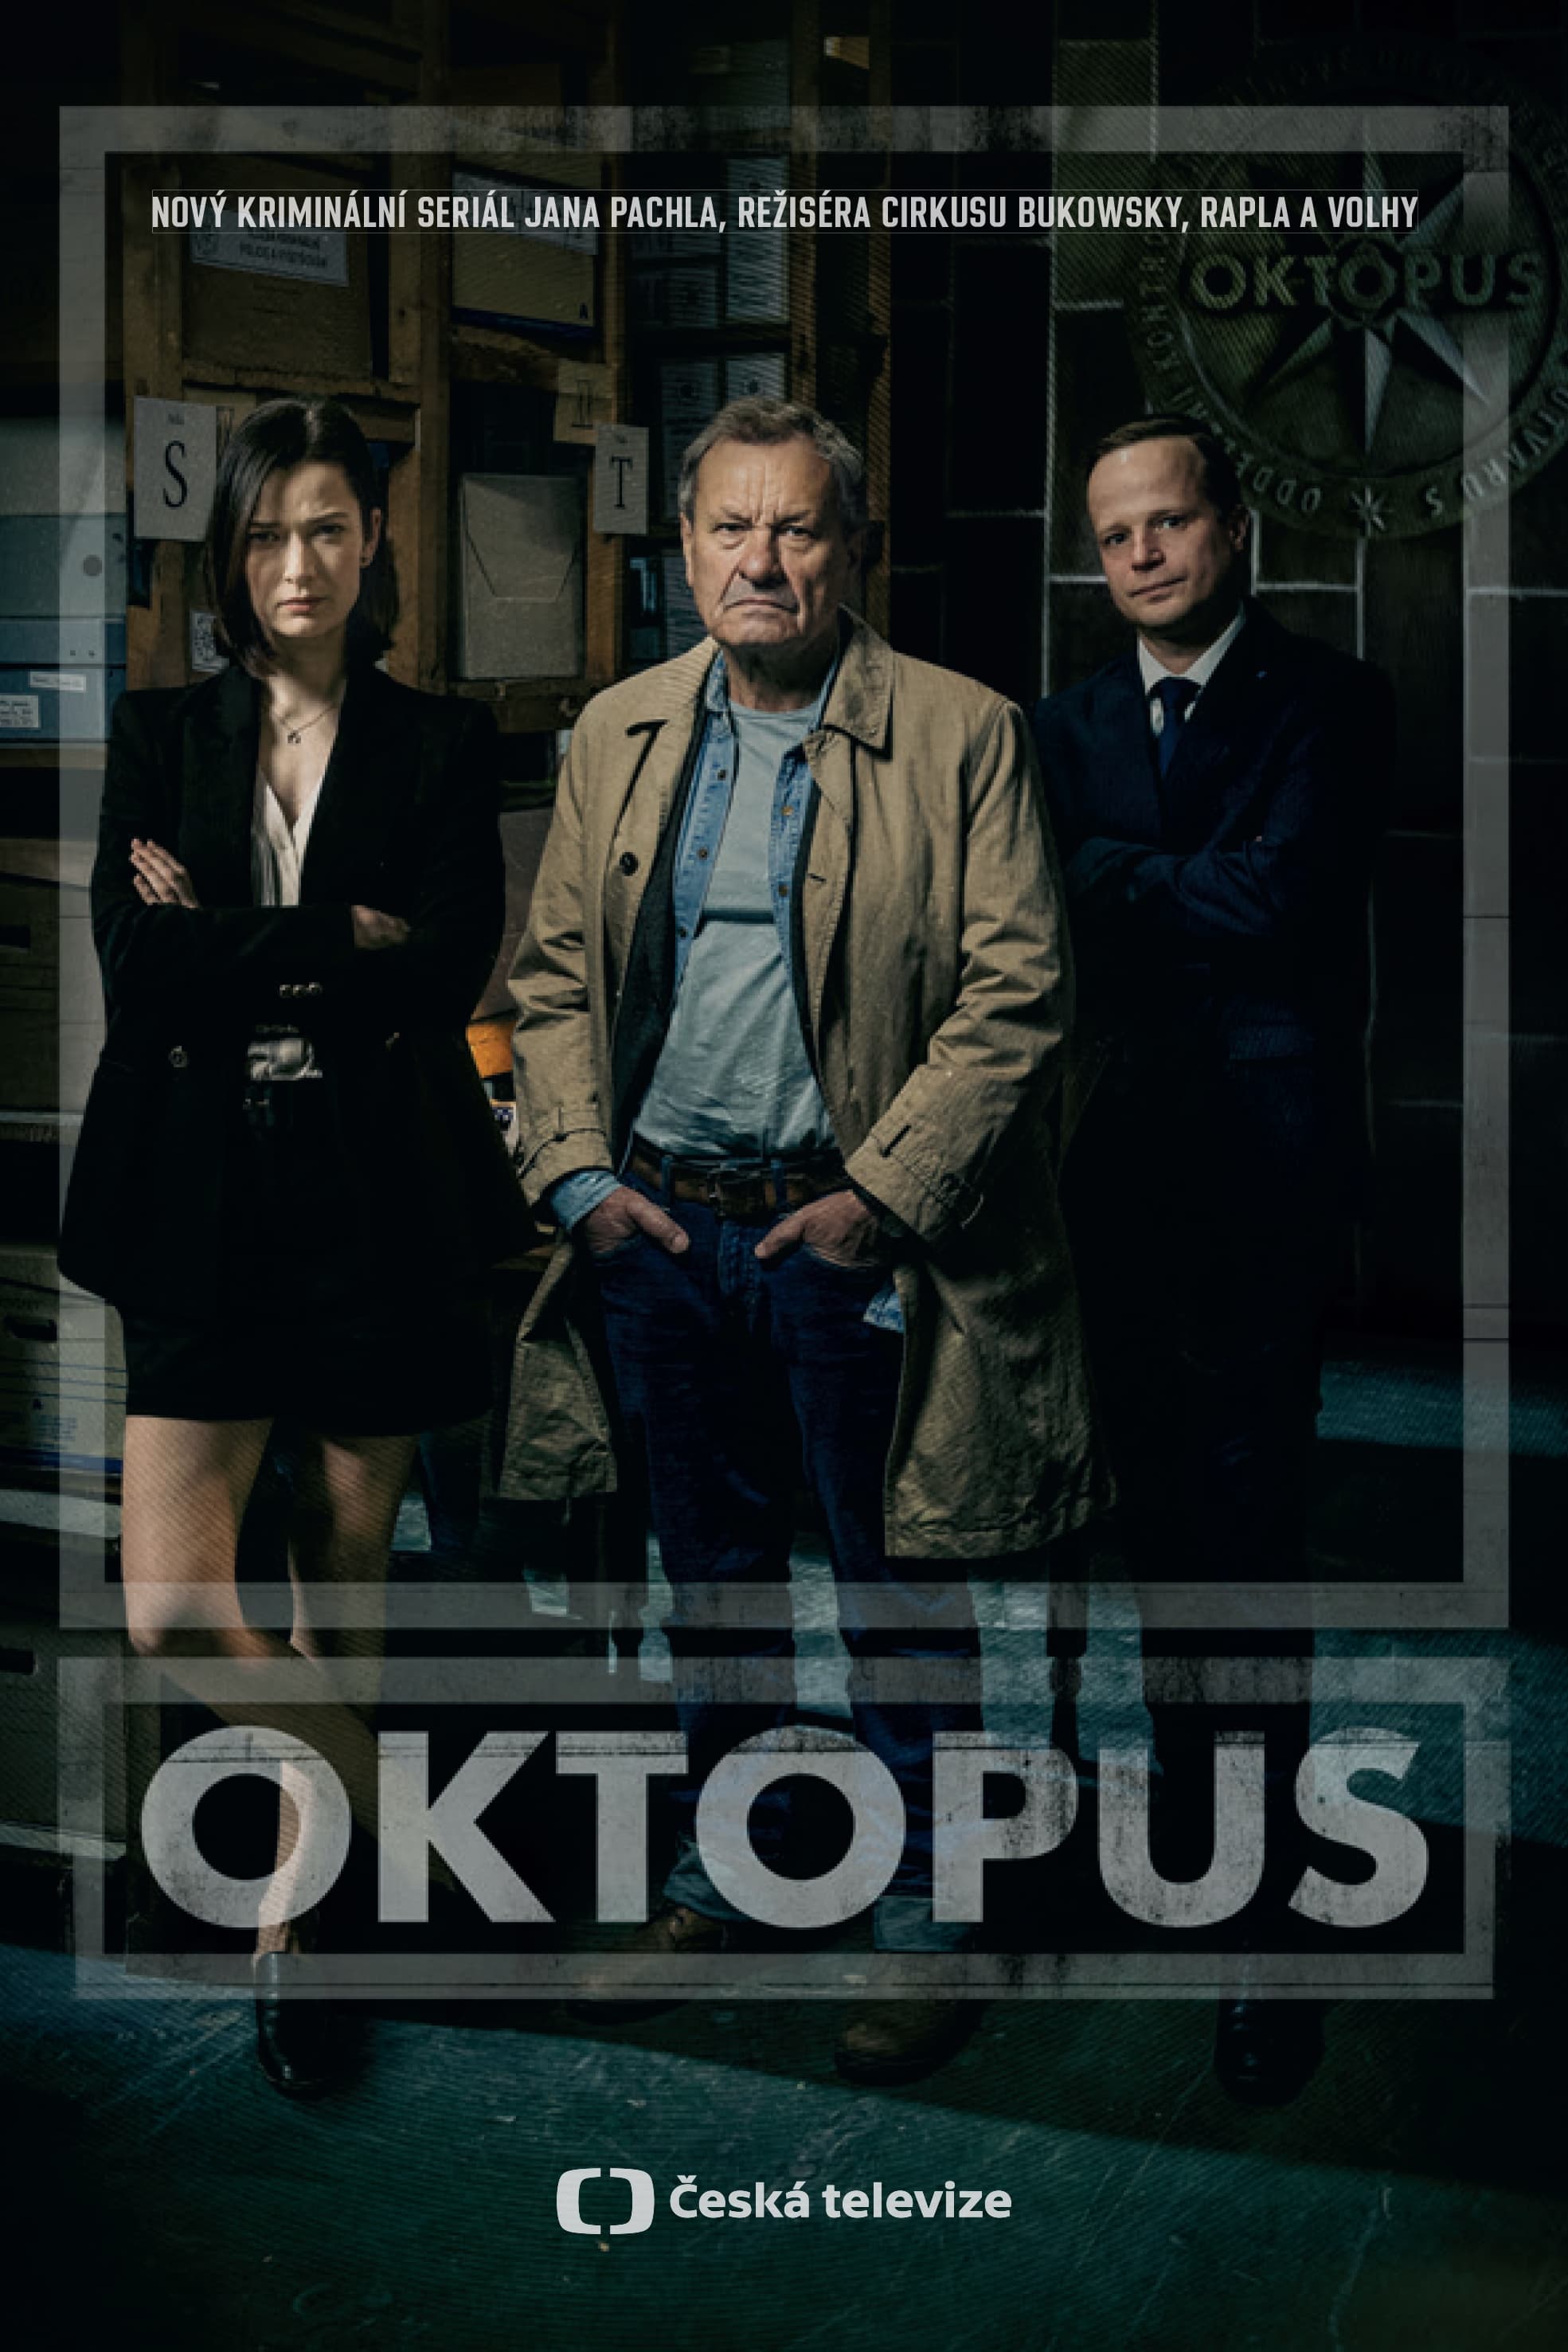 TV ratings for Oktopus in the United Kingdom. ČT1 TV series